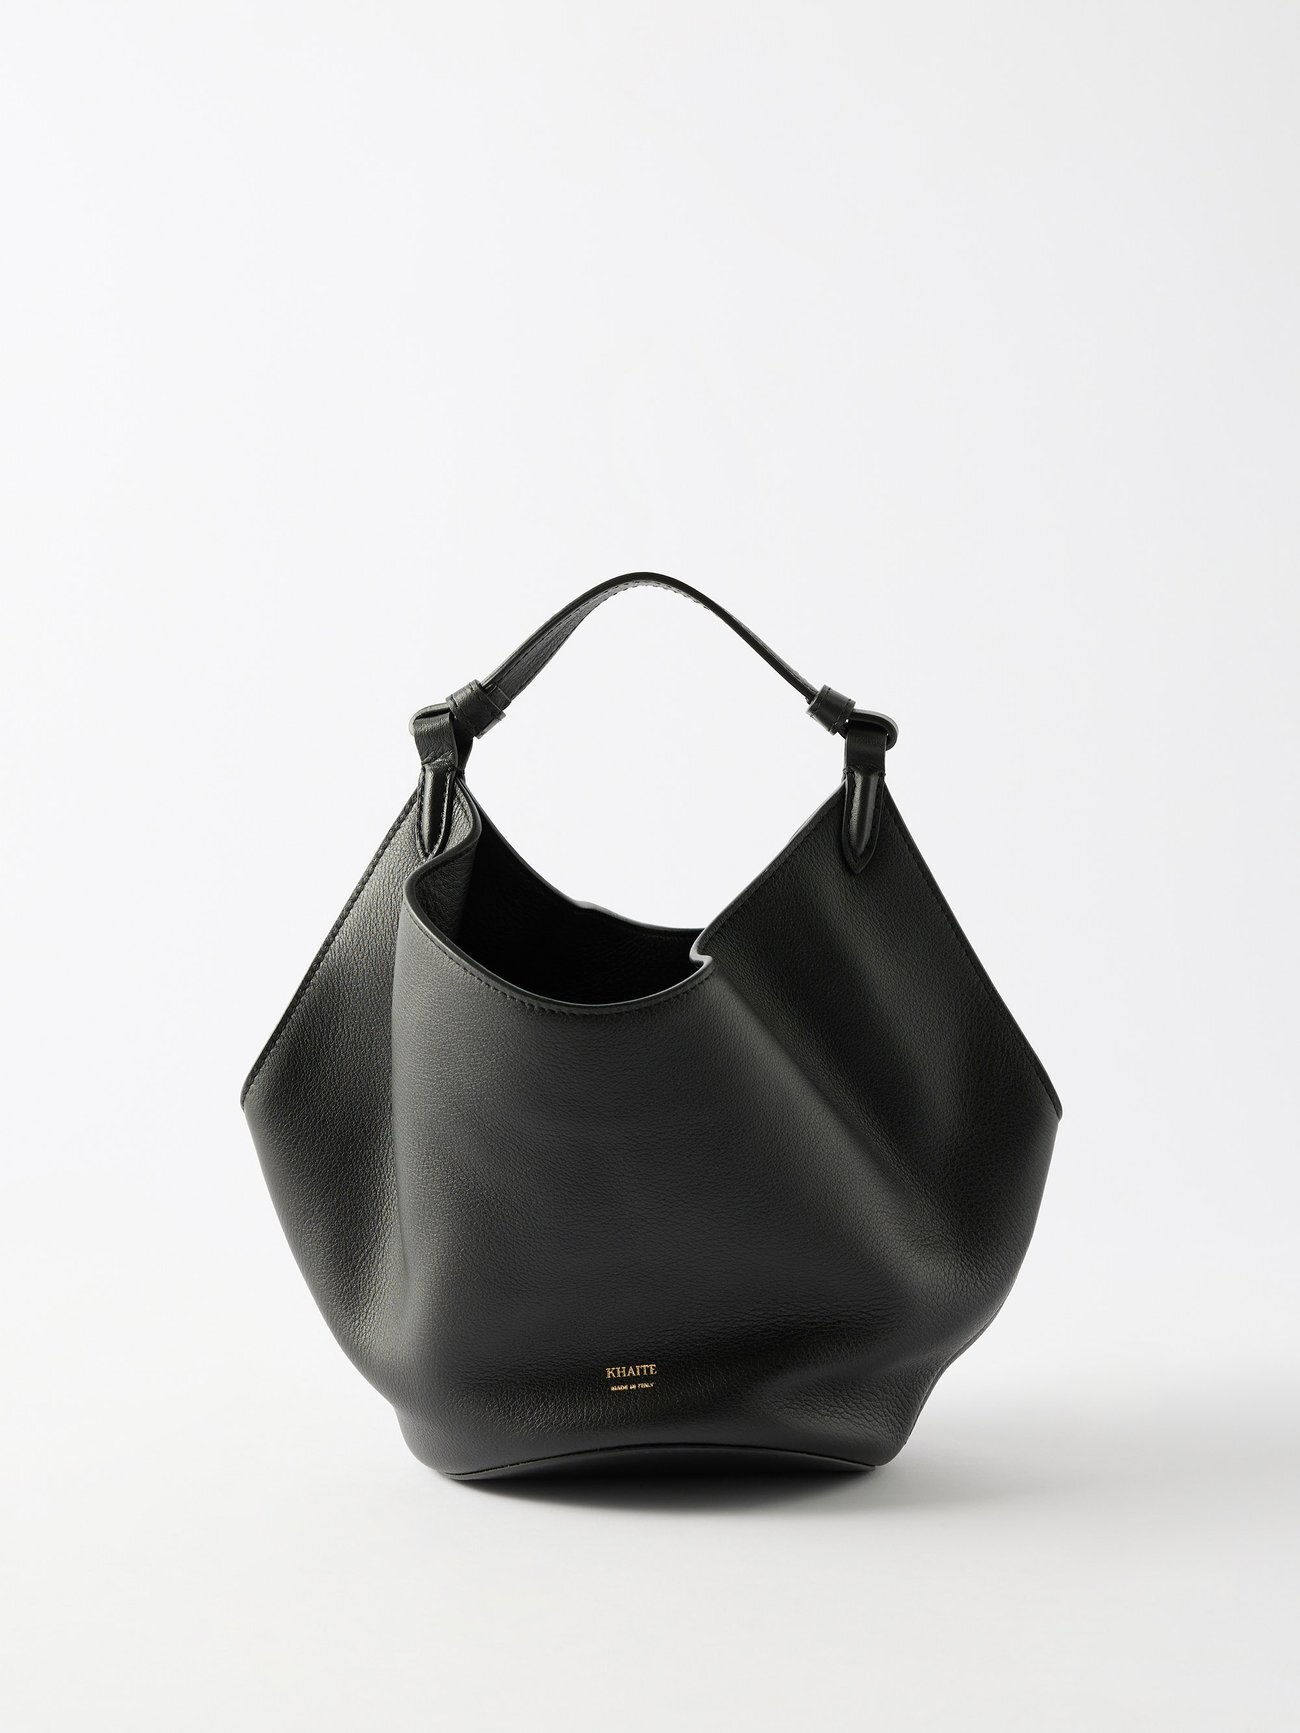 Khaite - Lotus Mini Leather Handbag - Womens - Black